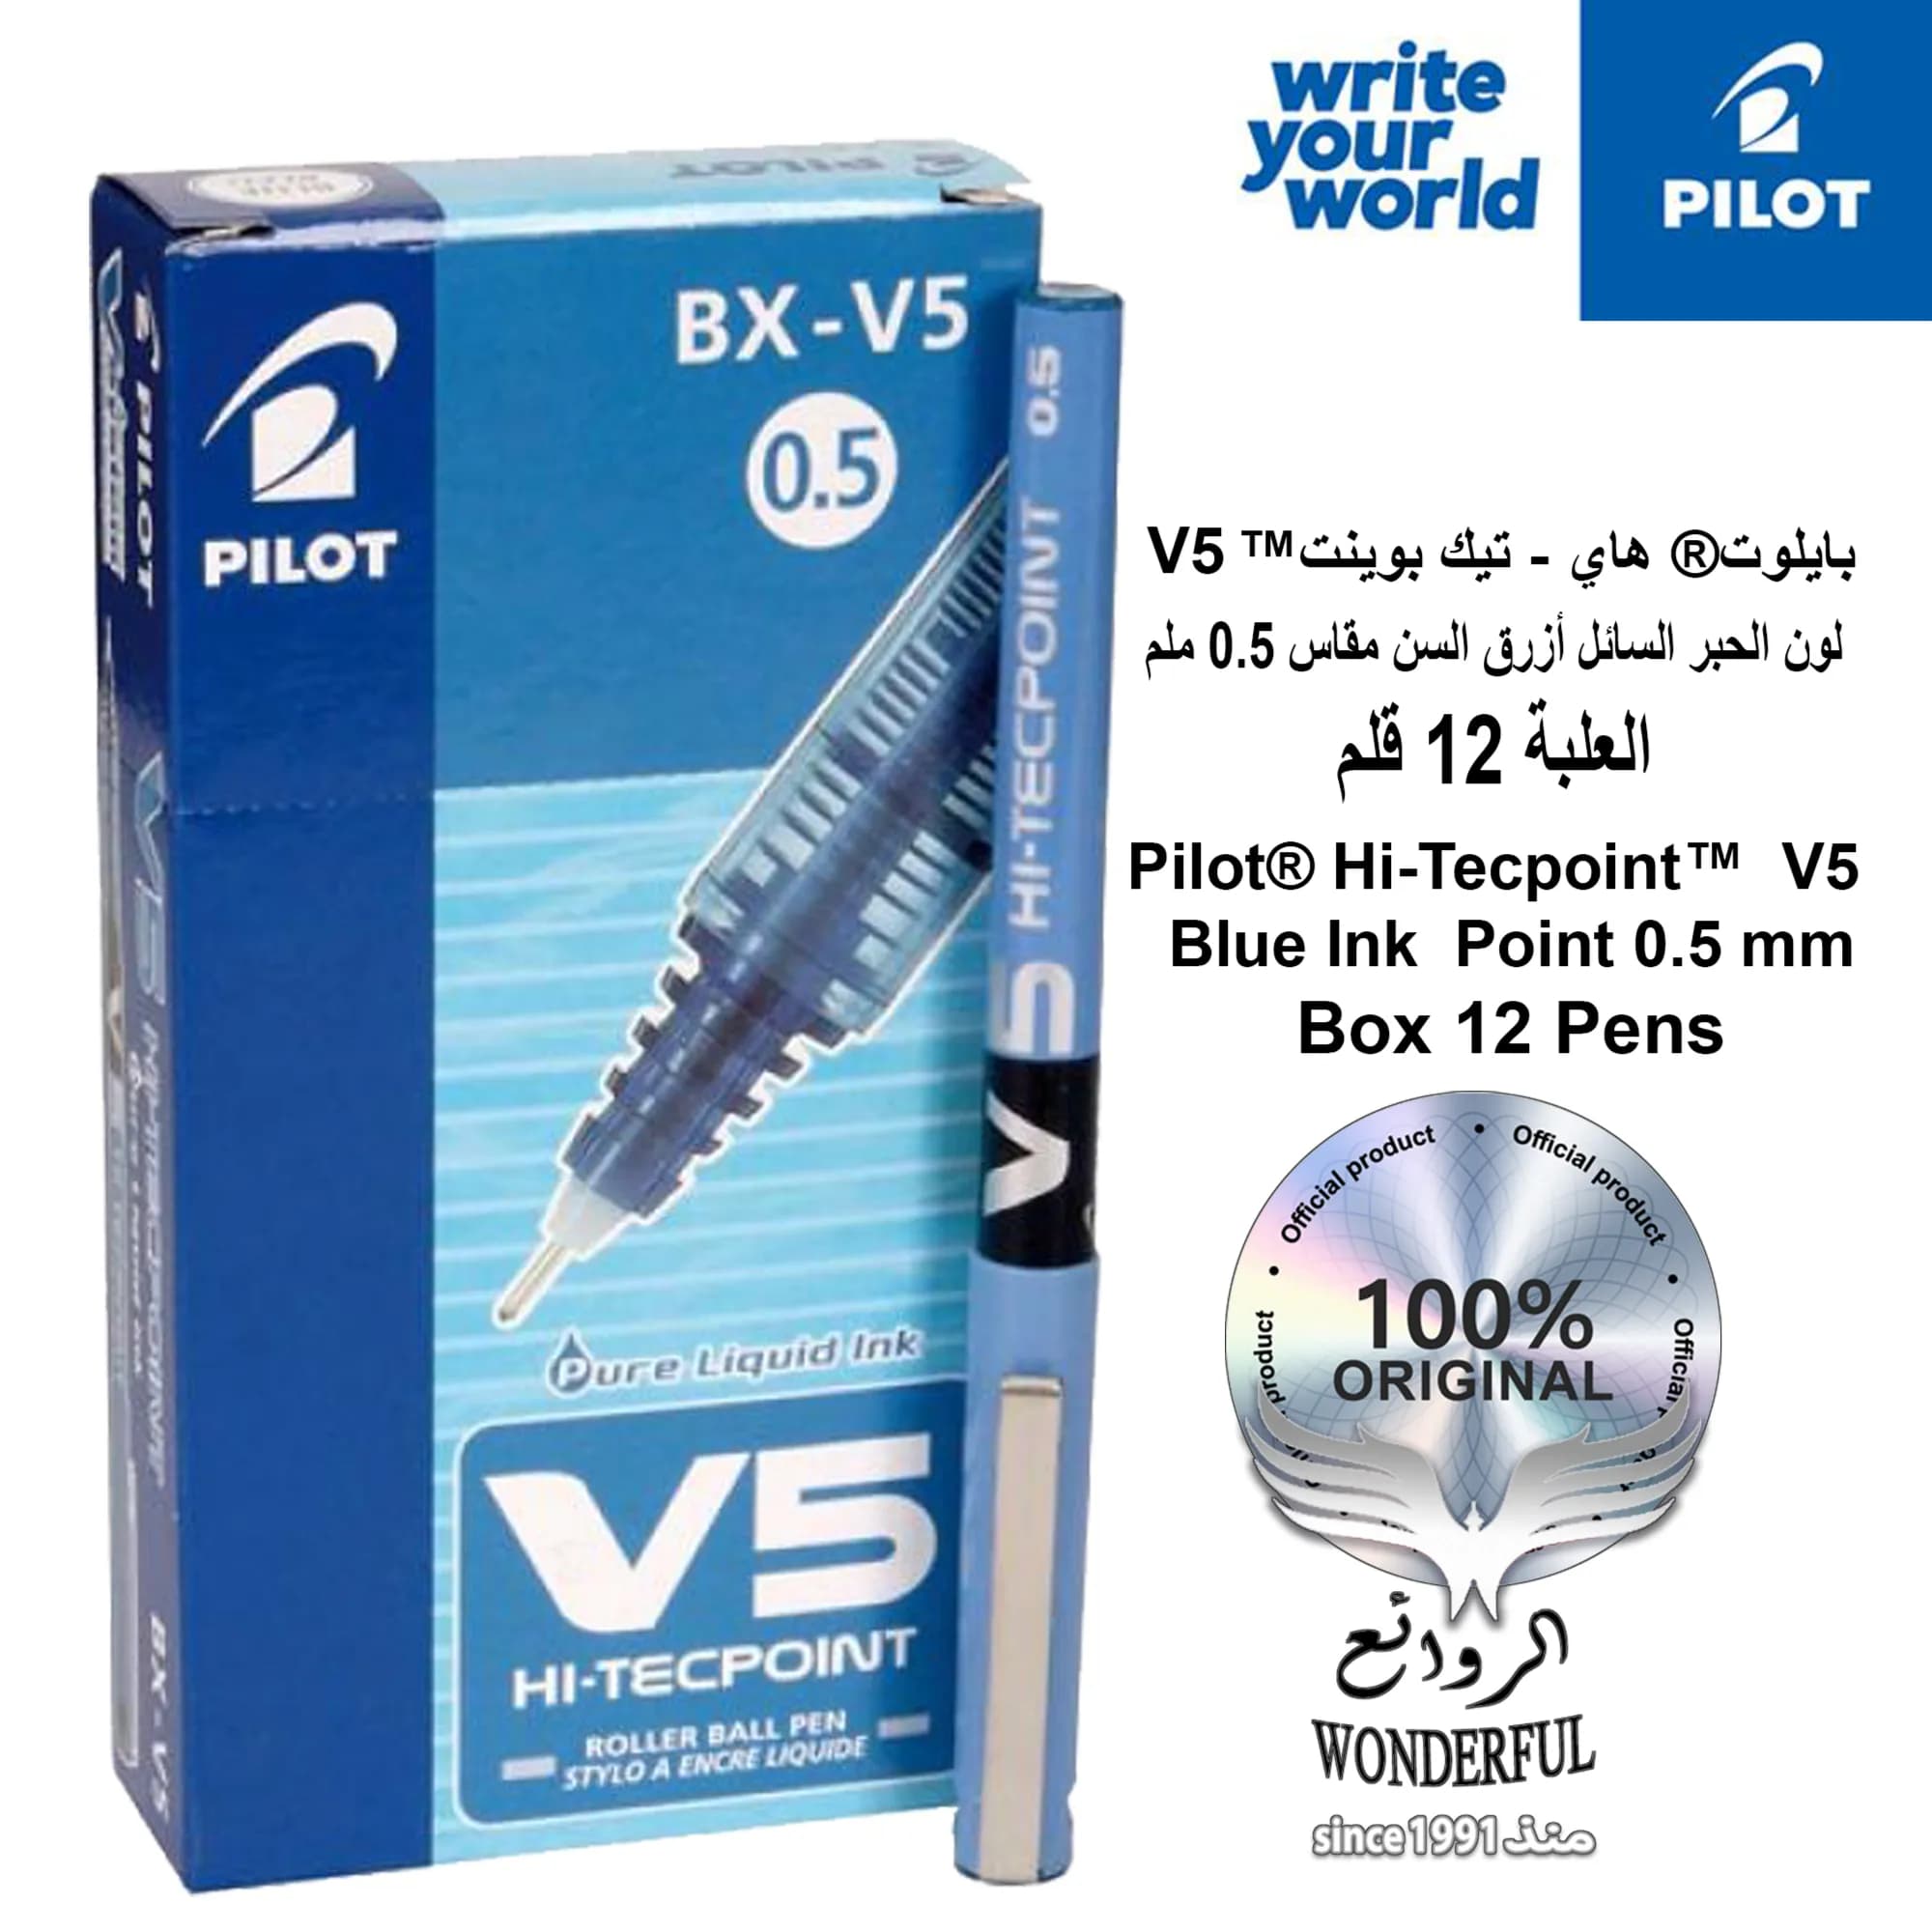 Pilot® Hi-Tecpoint™  V5   Liquid Ink Rollerball Pen - Blue Ink - Fine Needle Tip Point 0.5 mm - Box 12 Pens